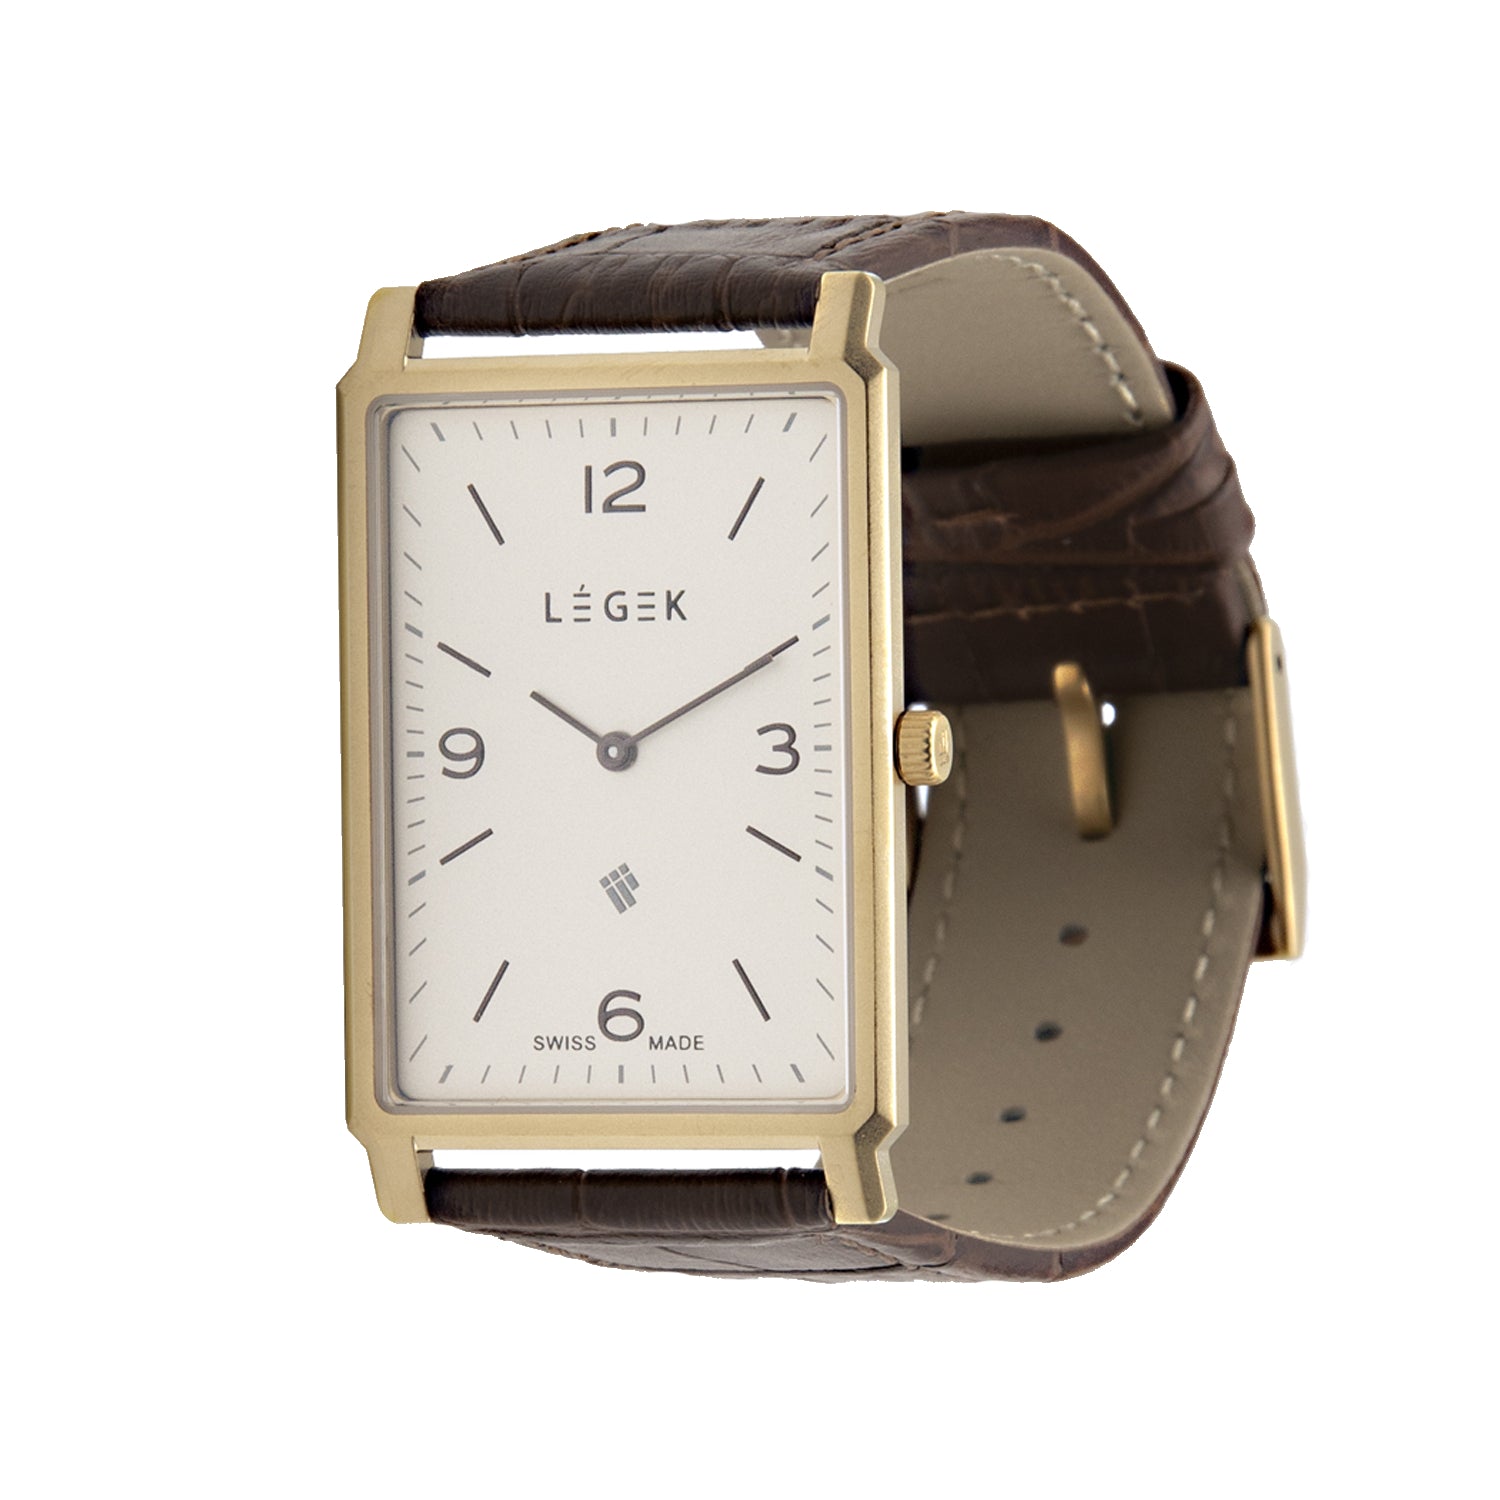 LEGIC Women's Quartz Watch, White Dial - LEG-0006